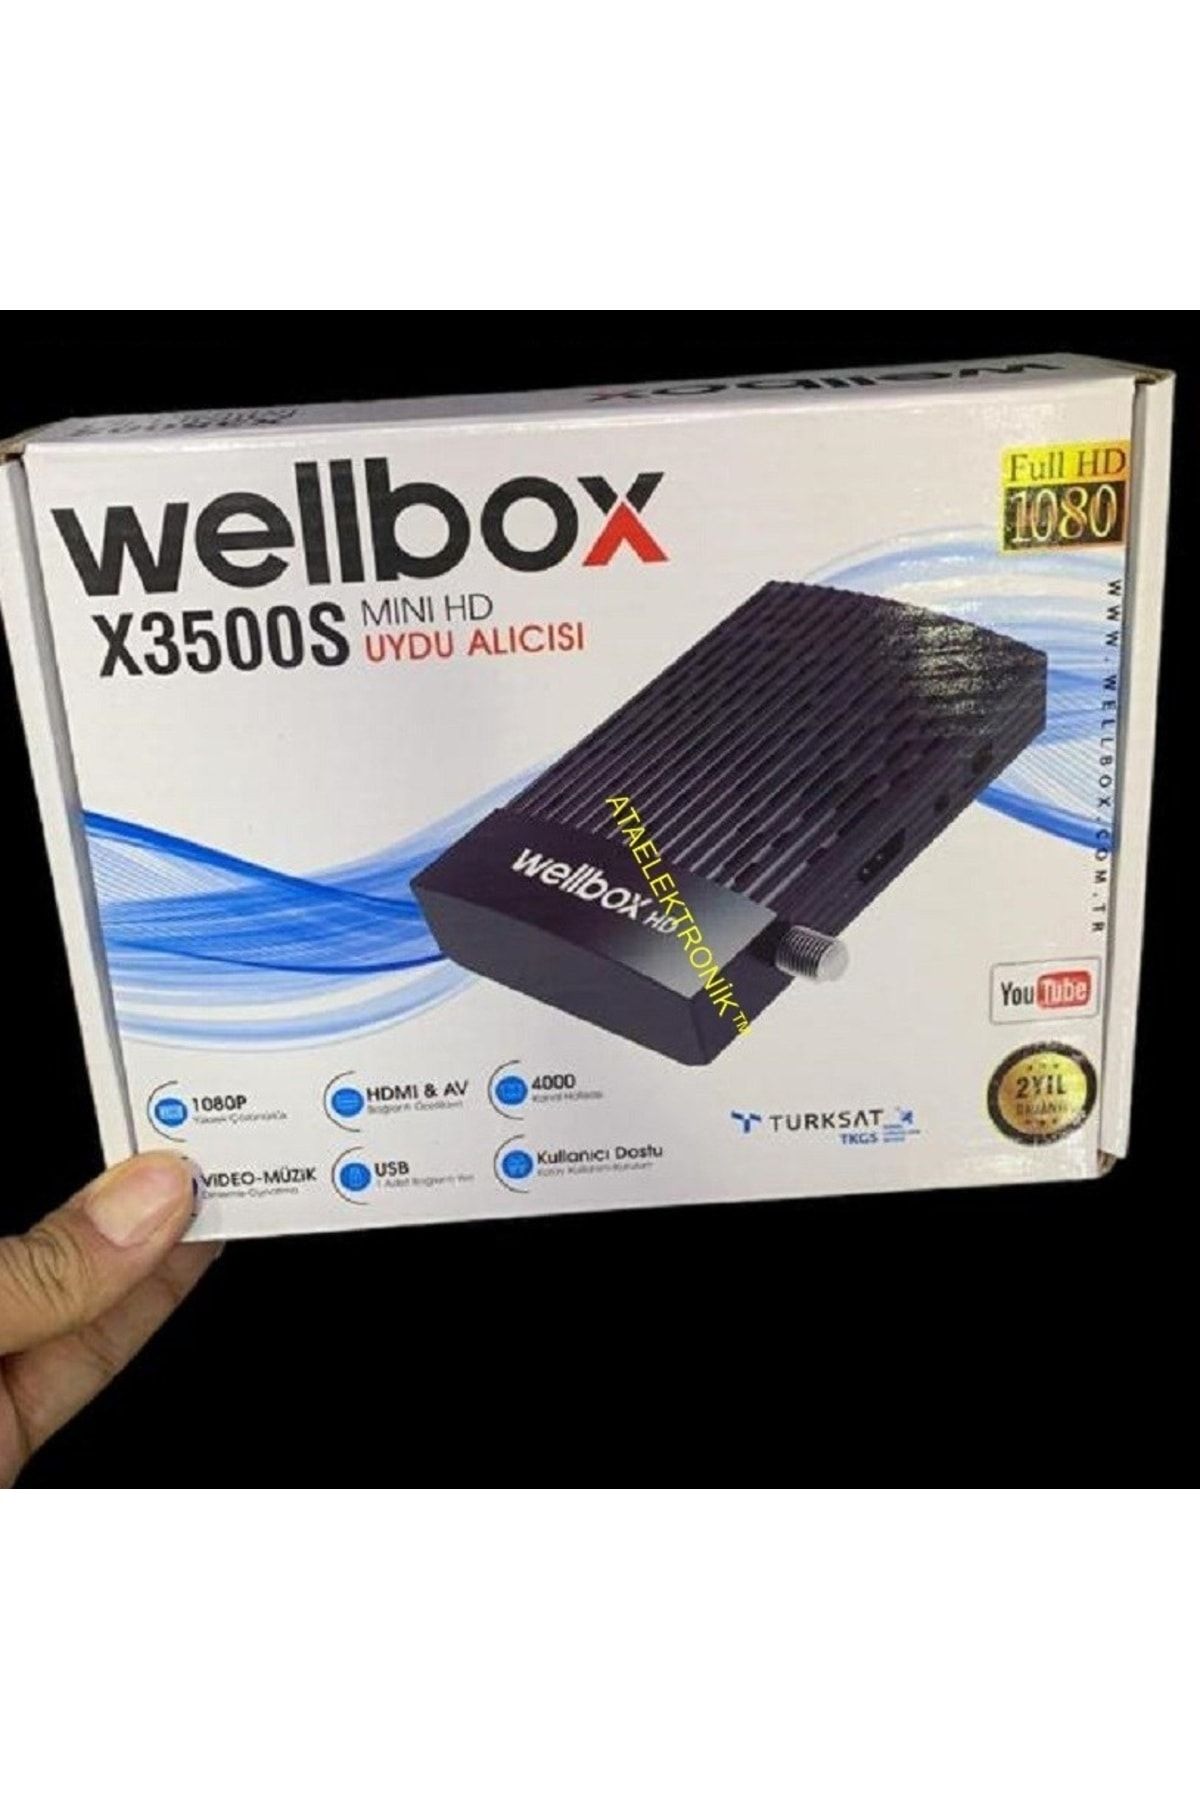 ATAELEKTRONİK Wellbox 3500s Mini Hd Uydu Alıcısı Cihazı Kanallar Yüklü Hazır Sıralı Tkgs